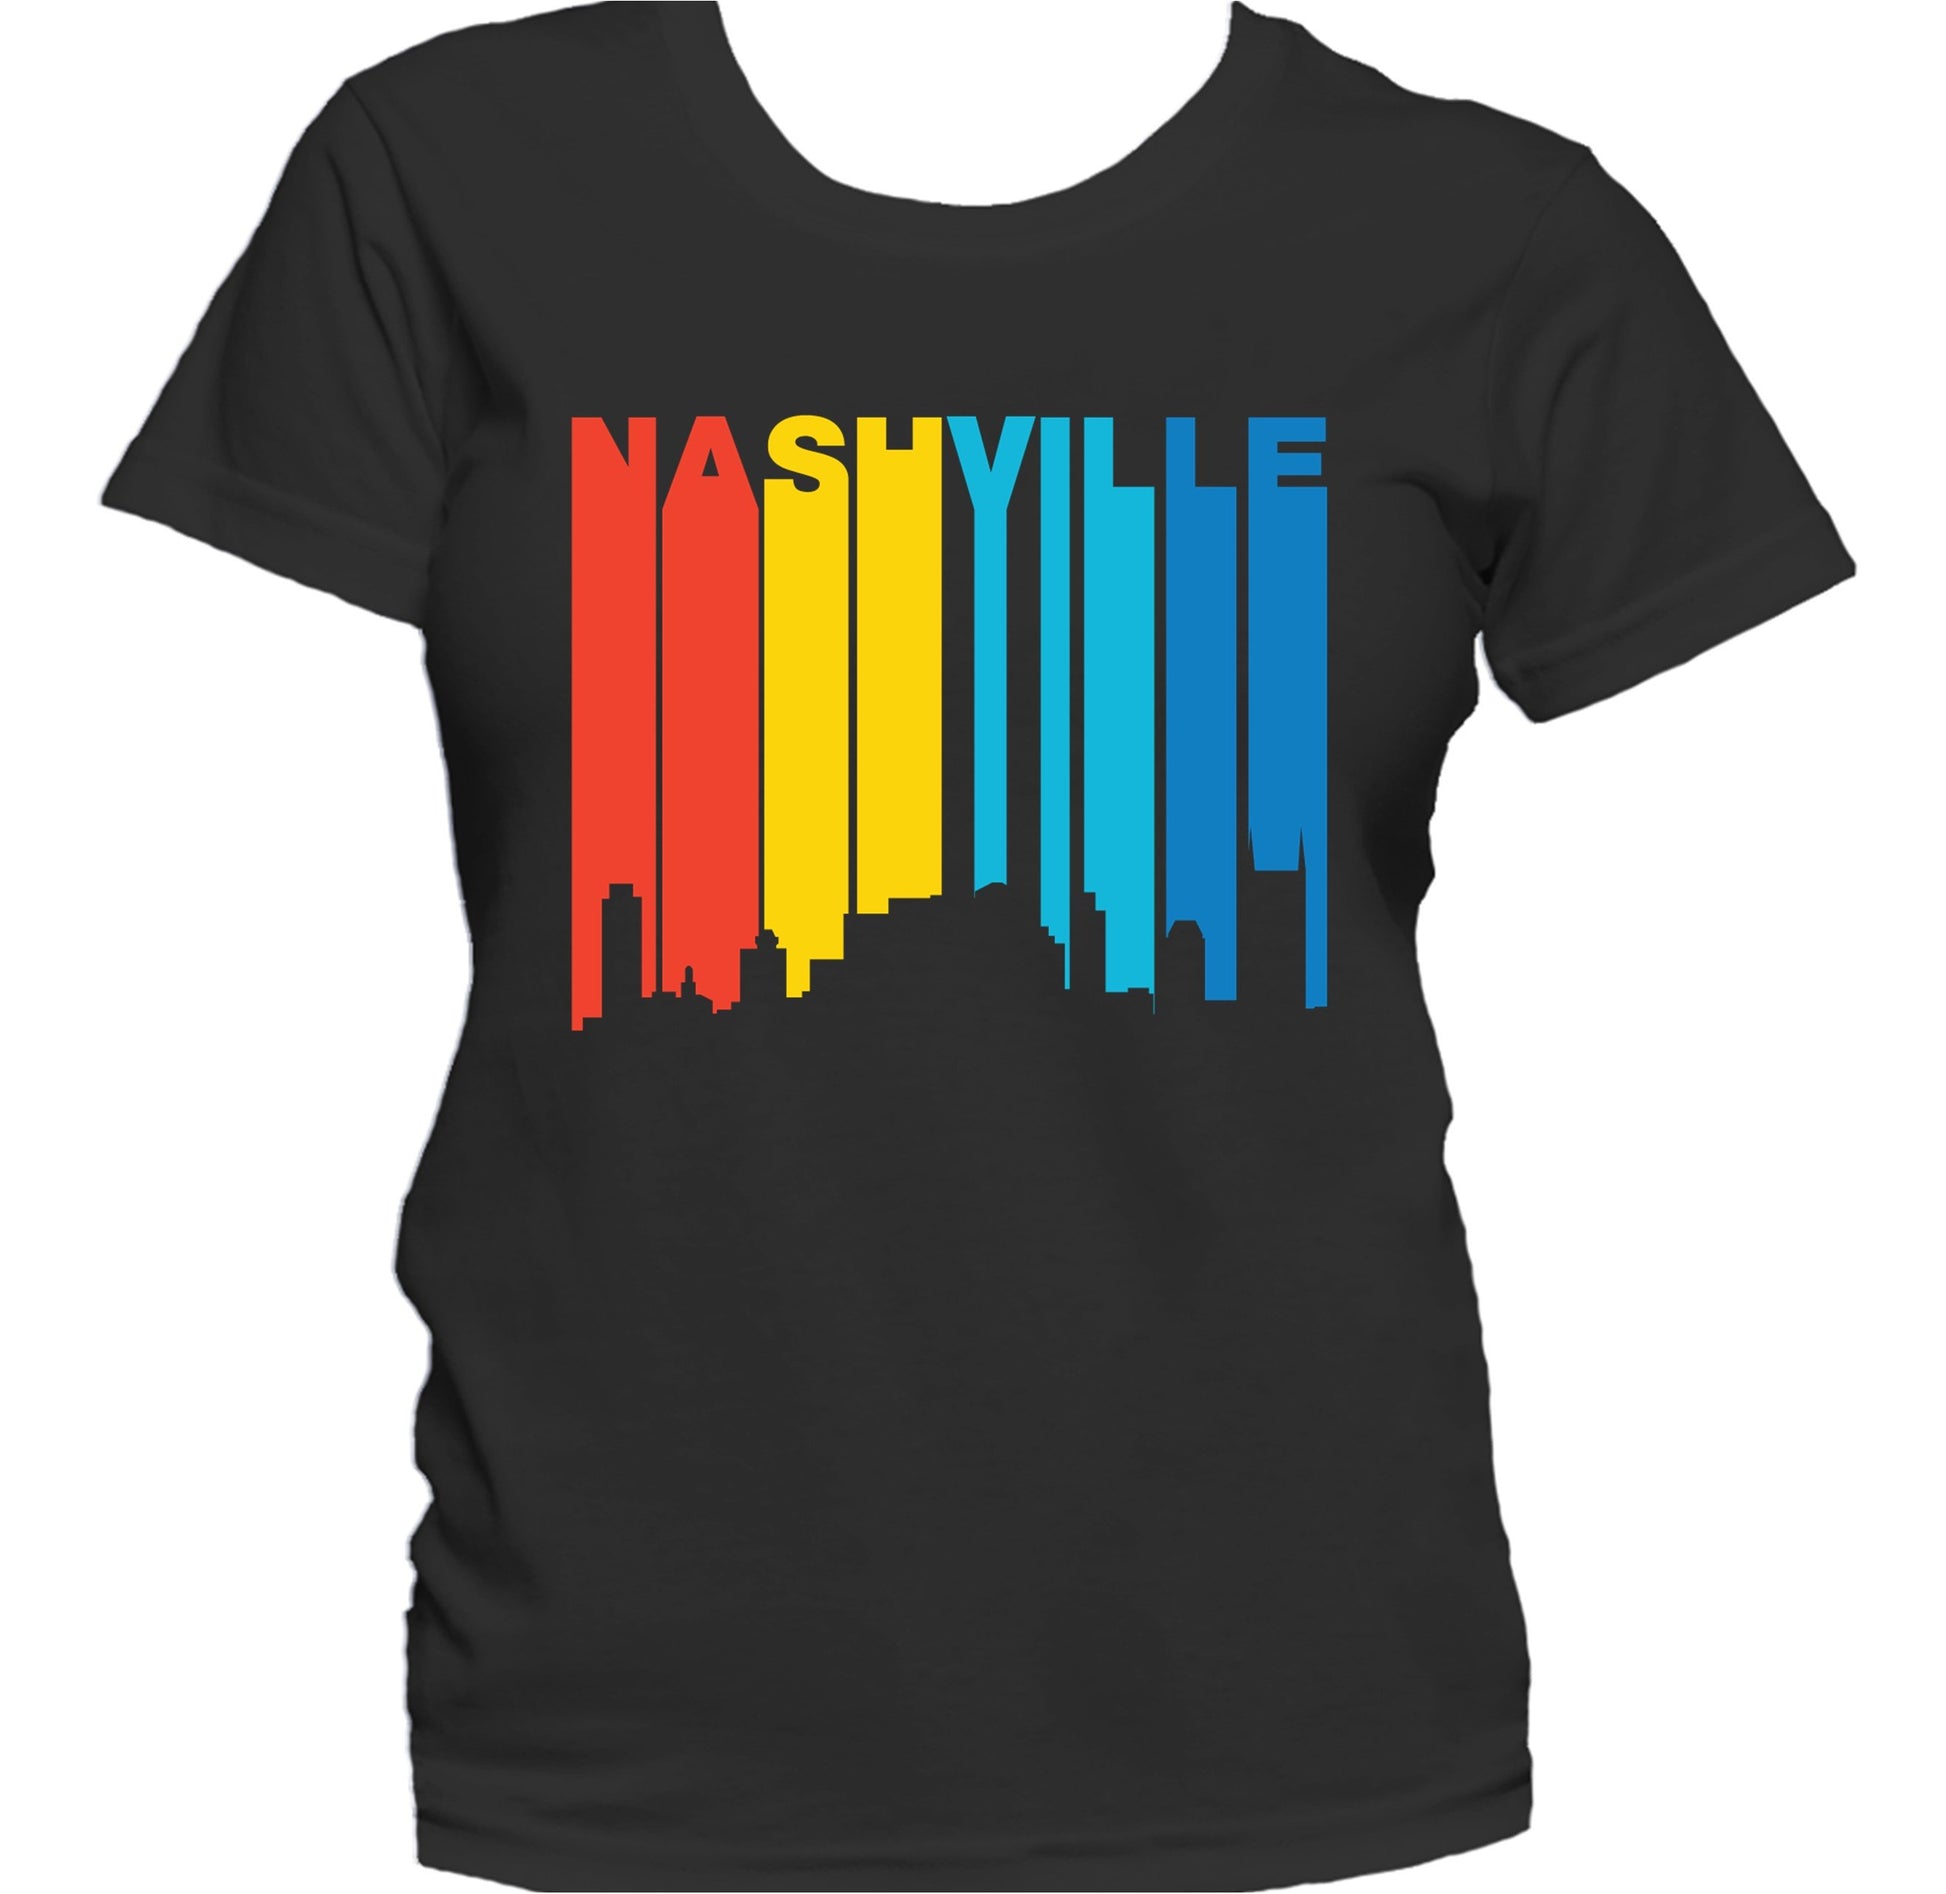 Retro 1970's Style Nashville Tennessee Skyline Women's T-Shirt